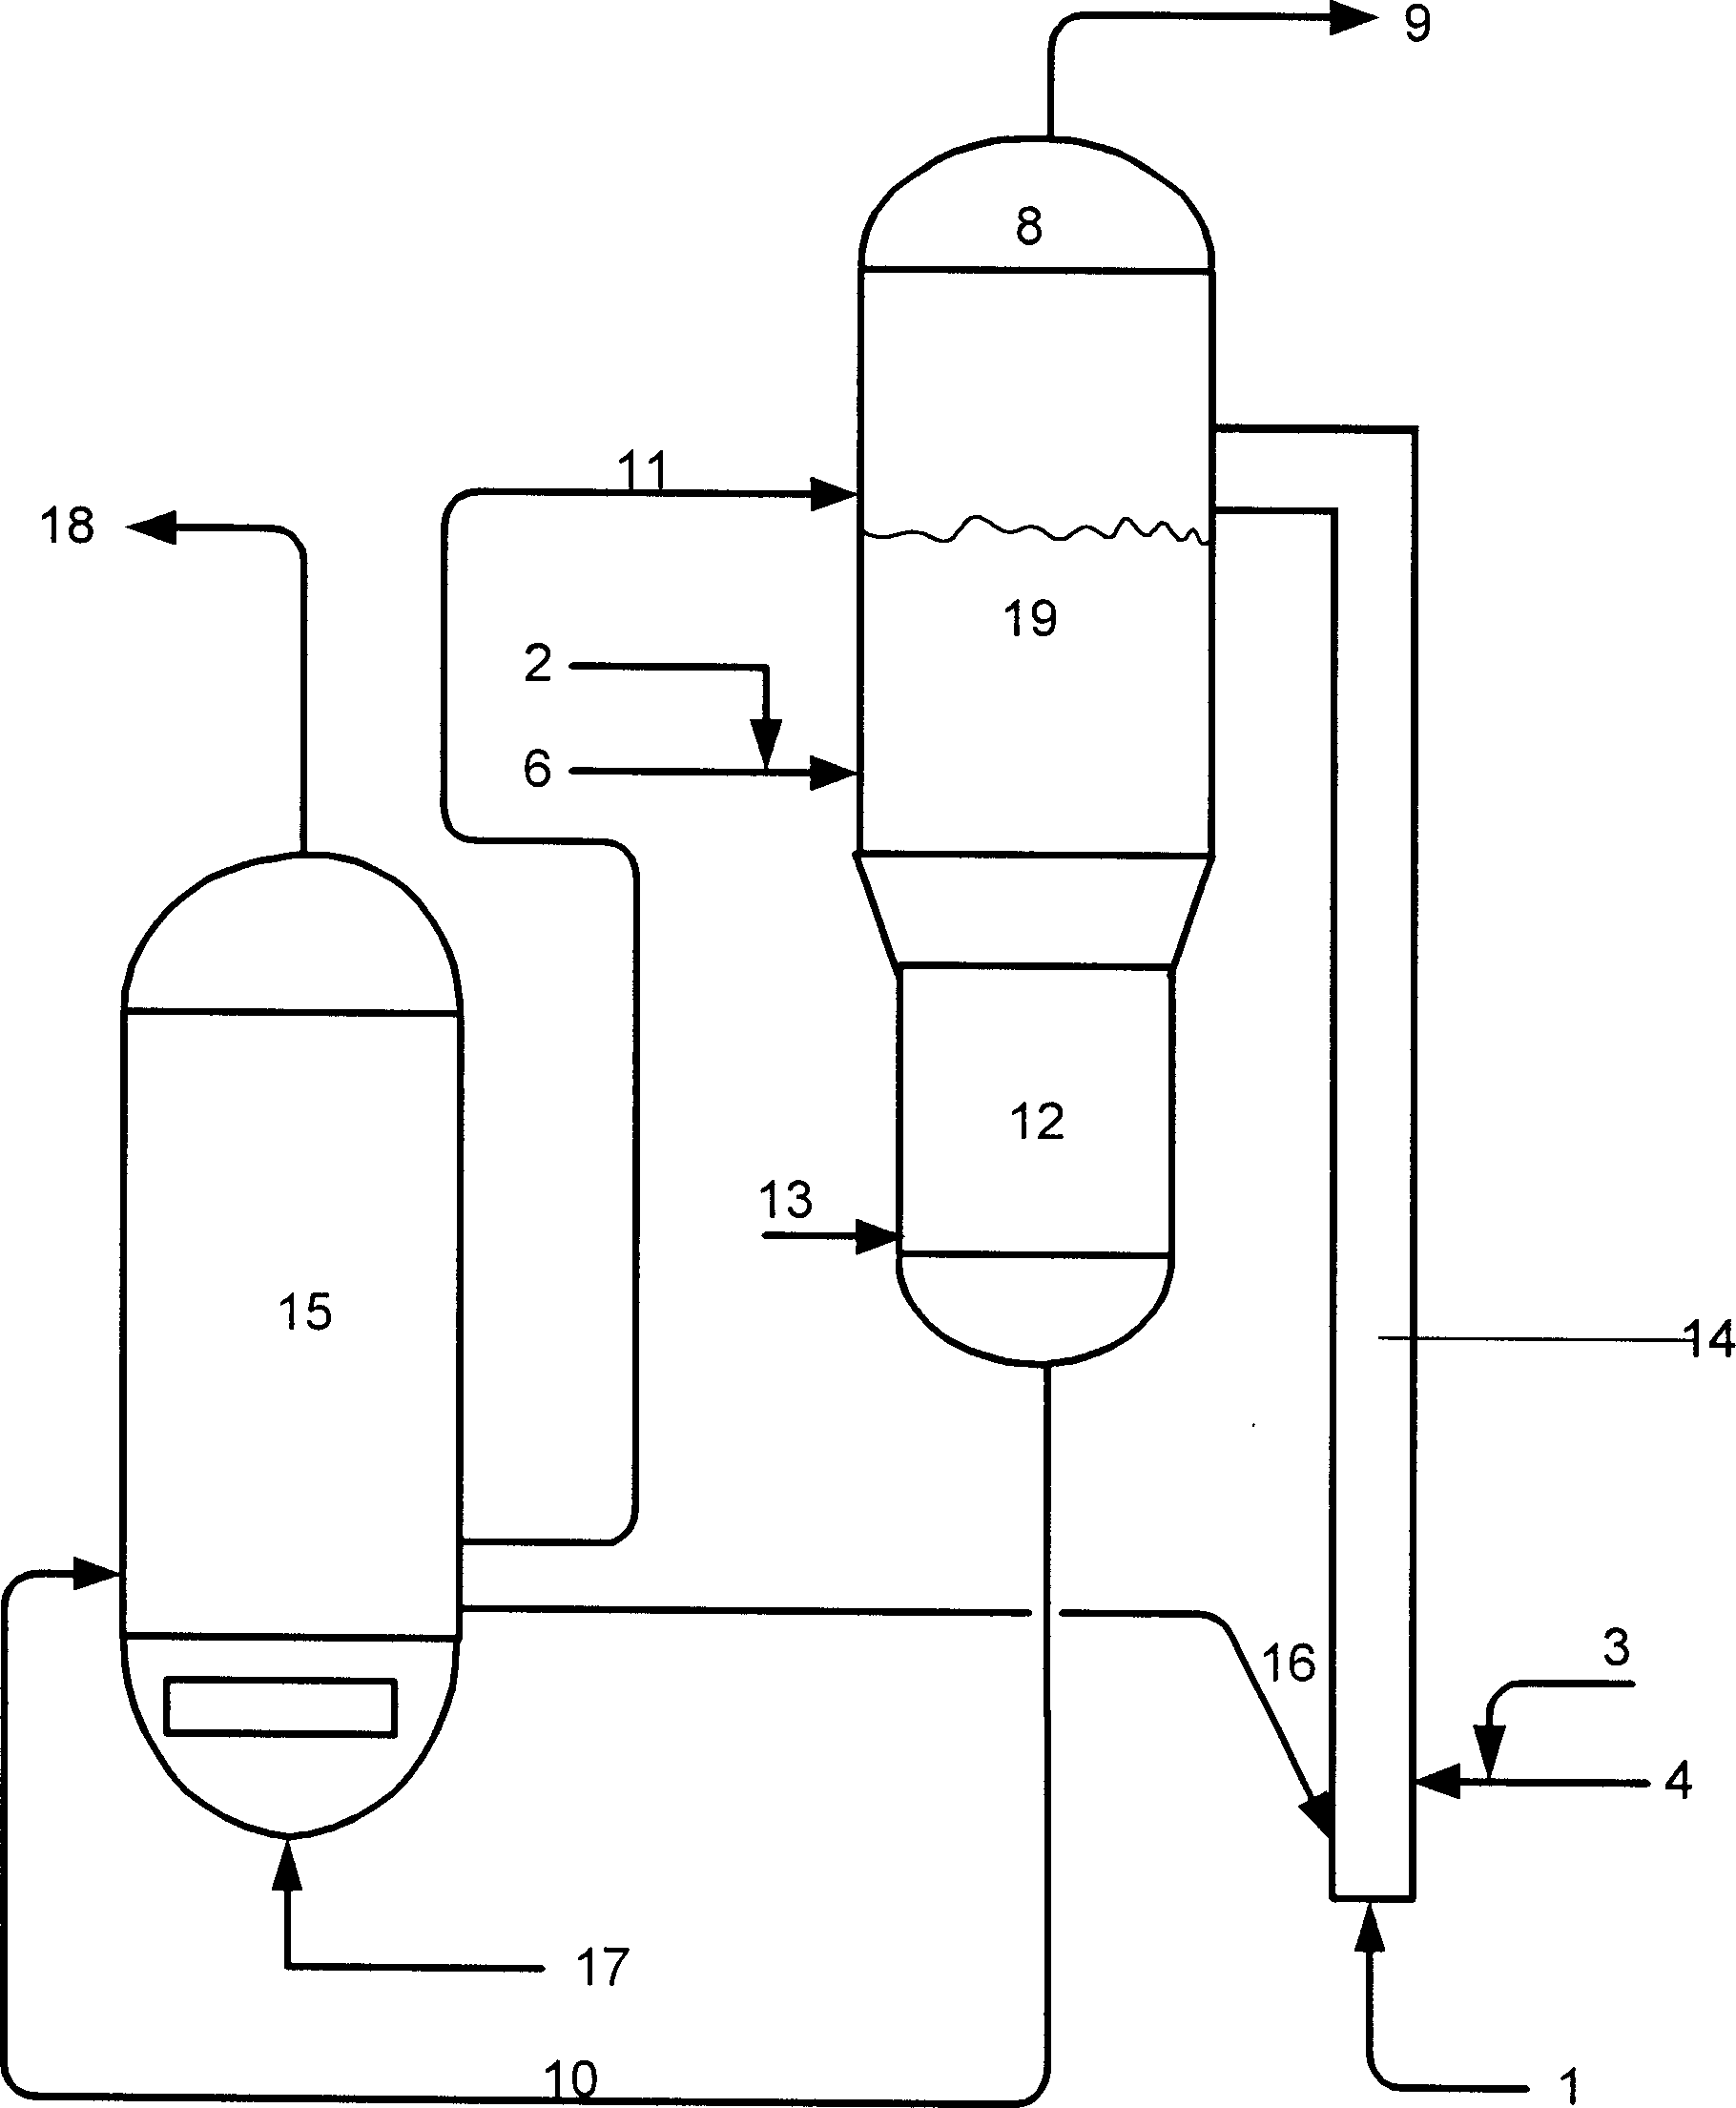 Catalytic conversion process of preparing ethylene and propylene